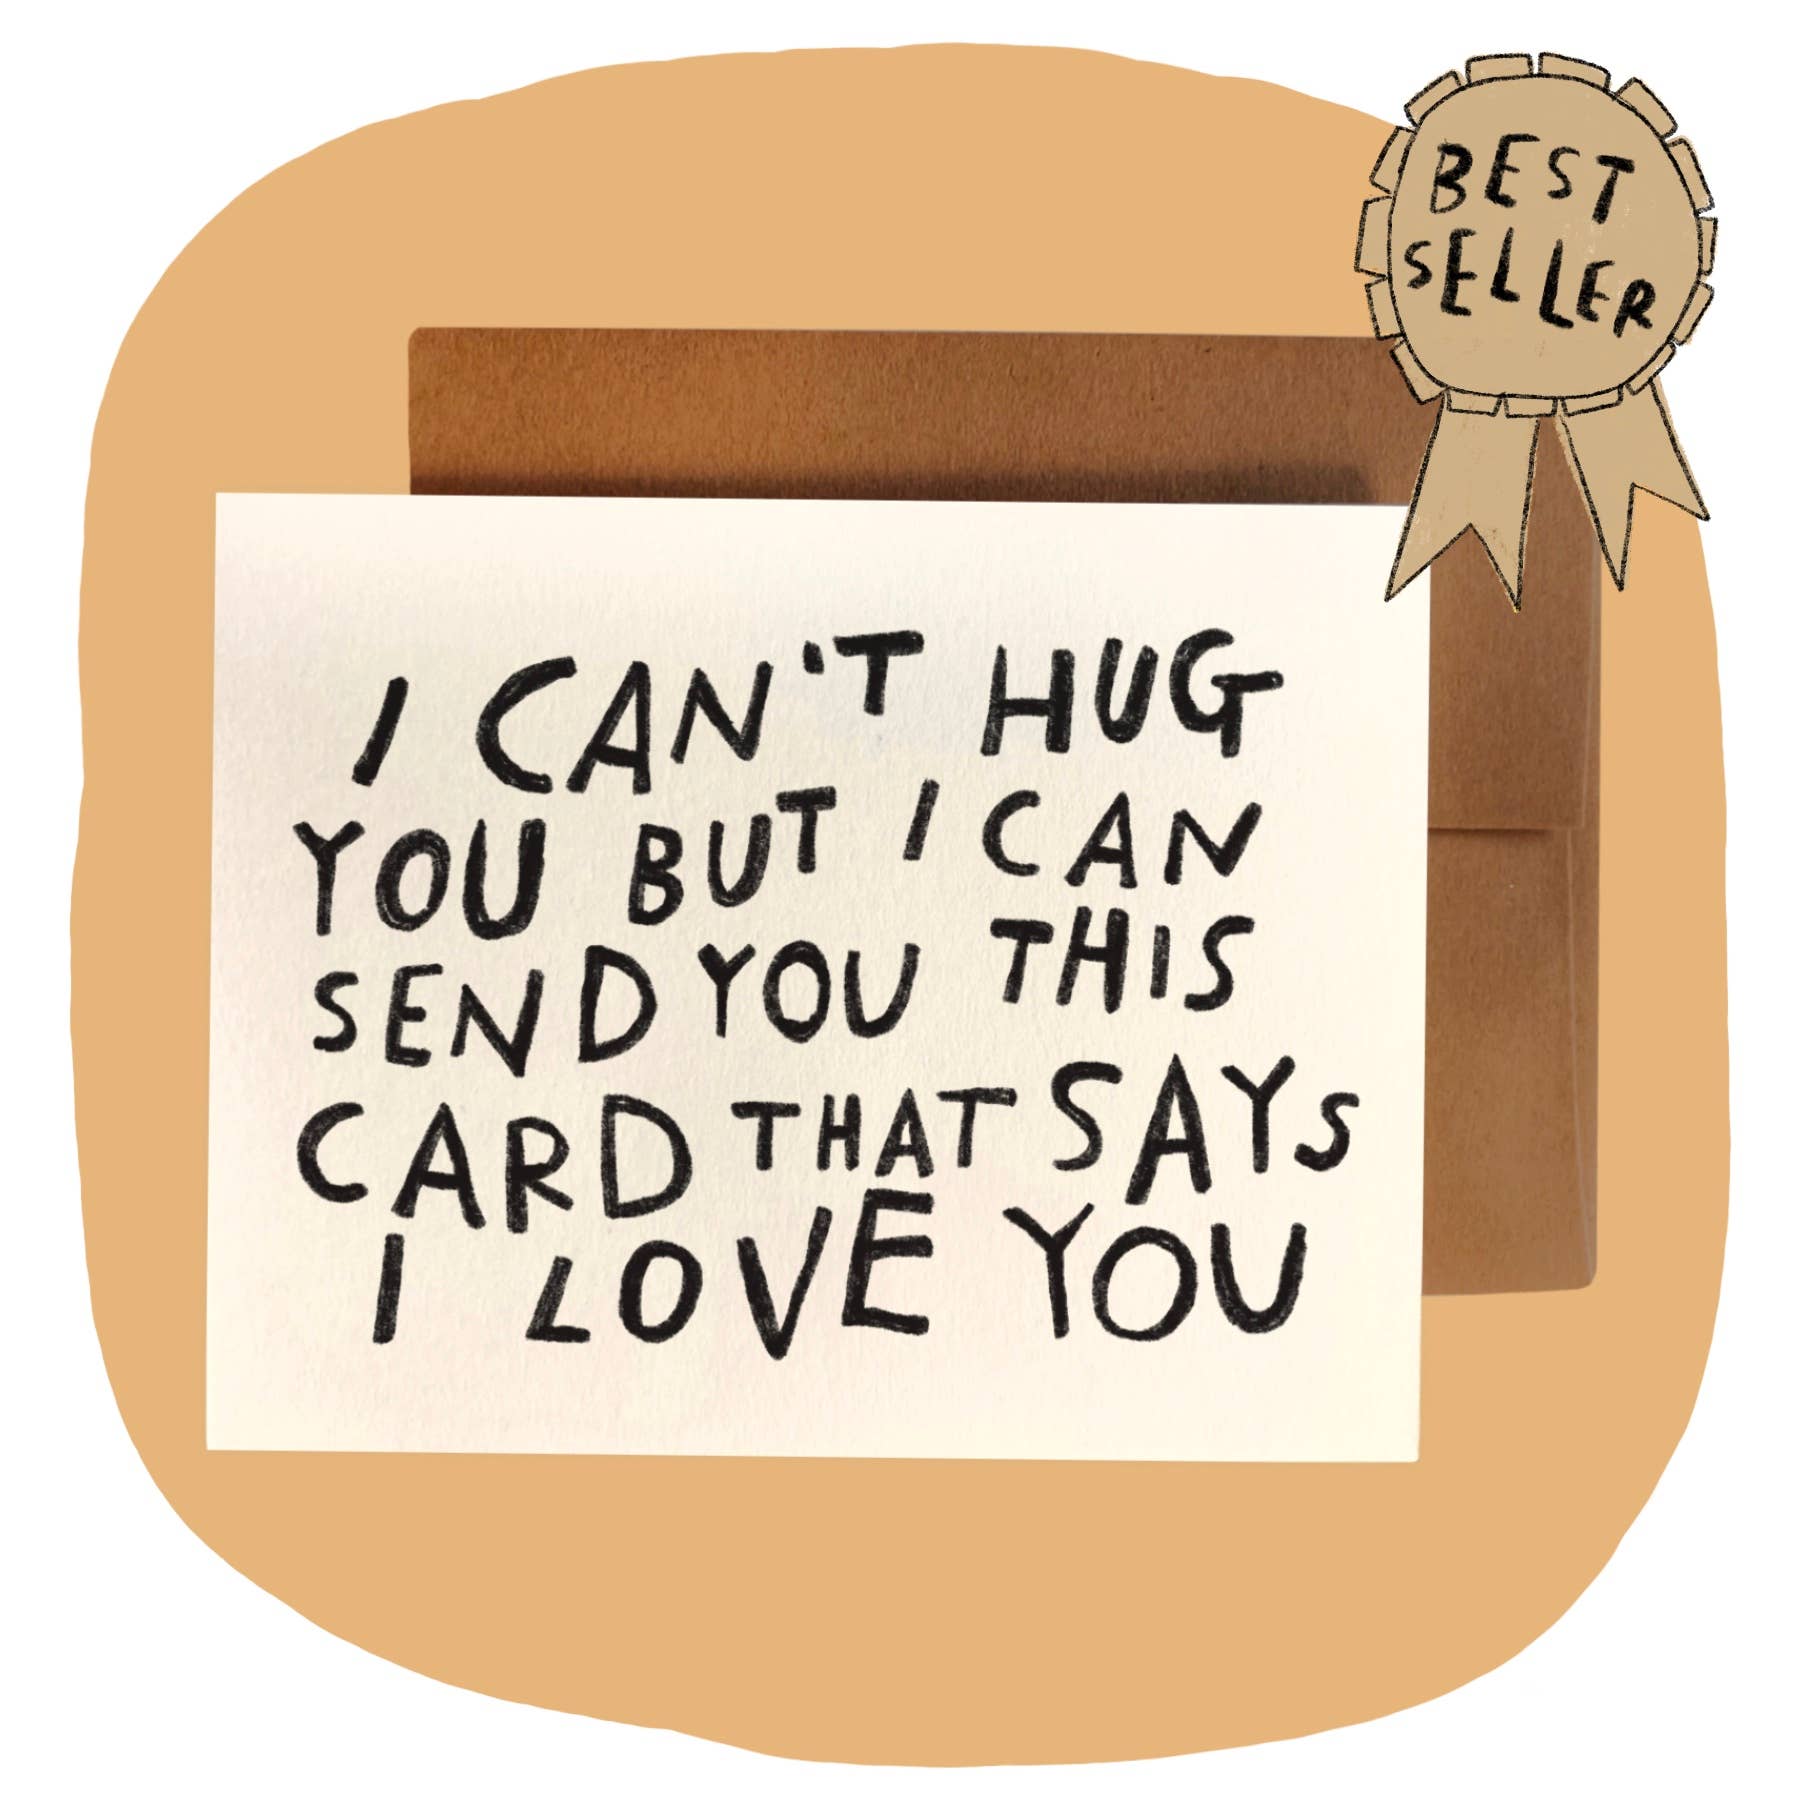 "CAN’T HUG YOU" Greeting Card